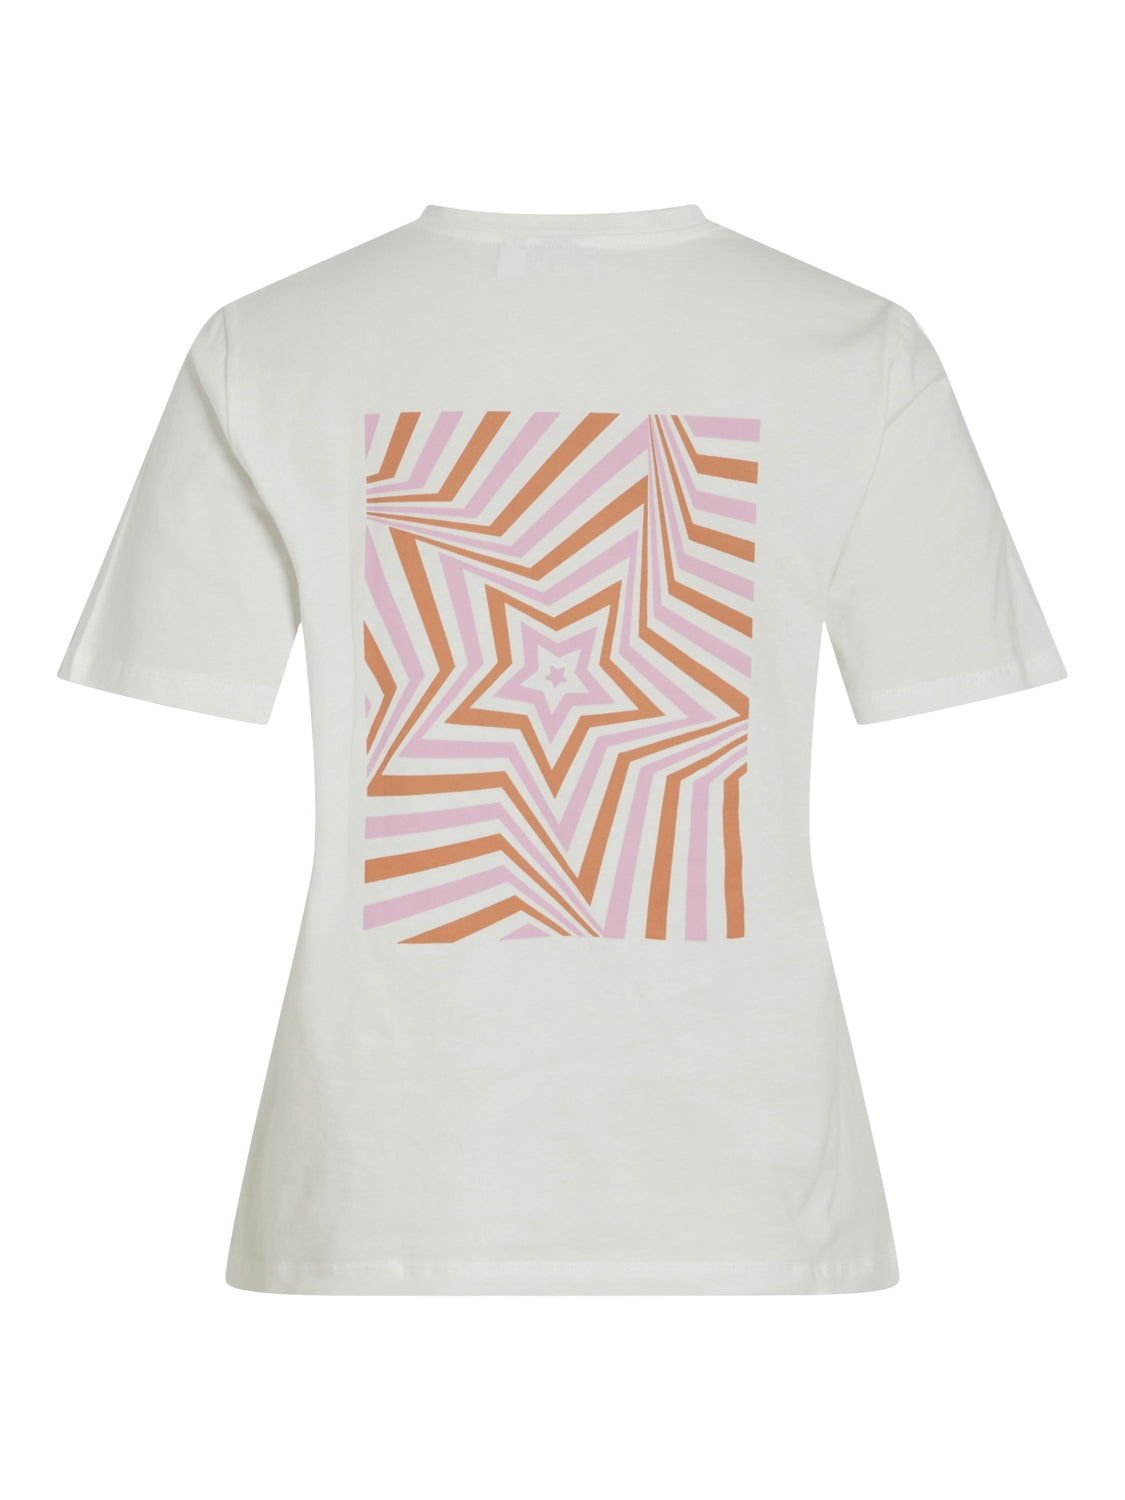 Ava T-Shirt (White/Pink/Orange Shine)